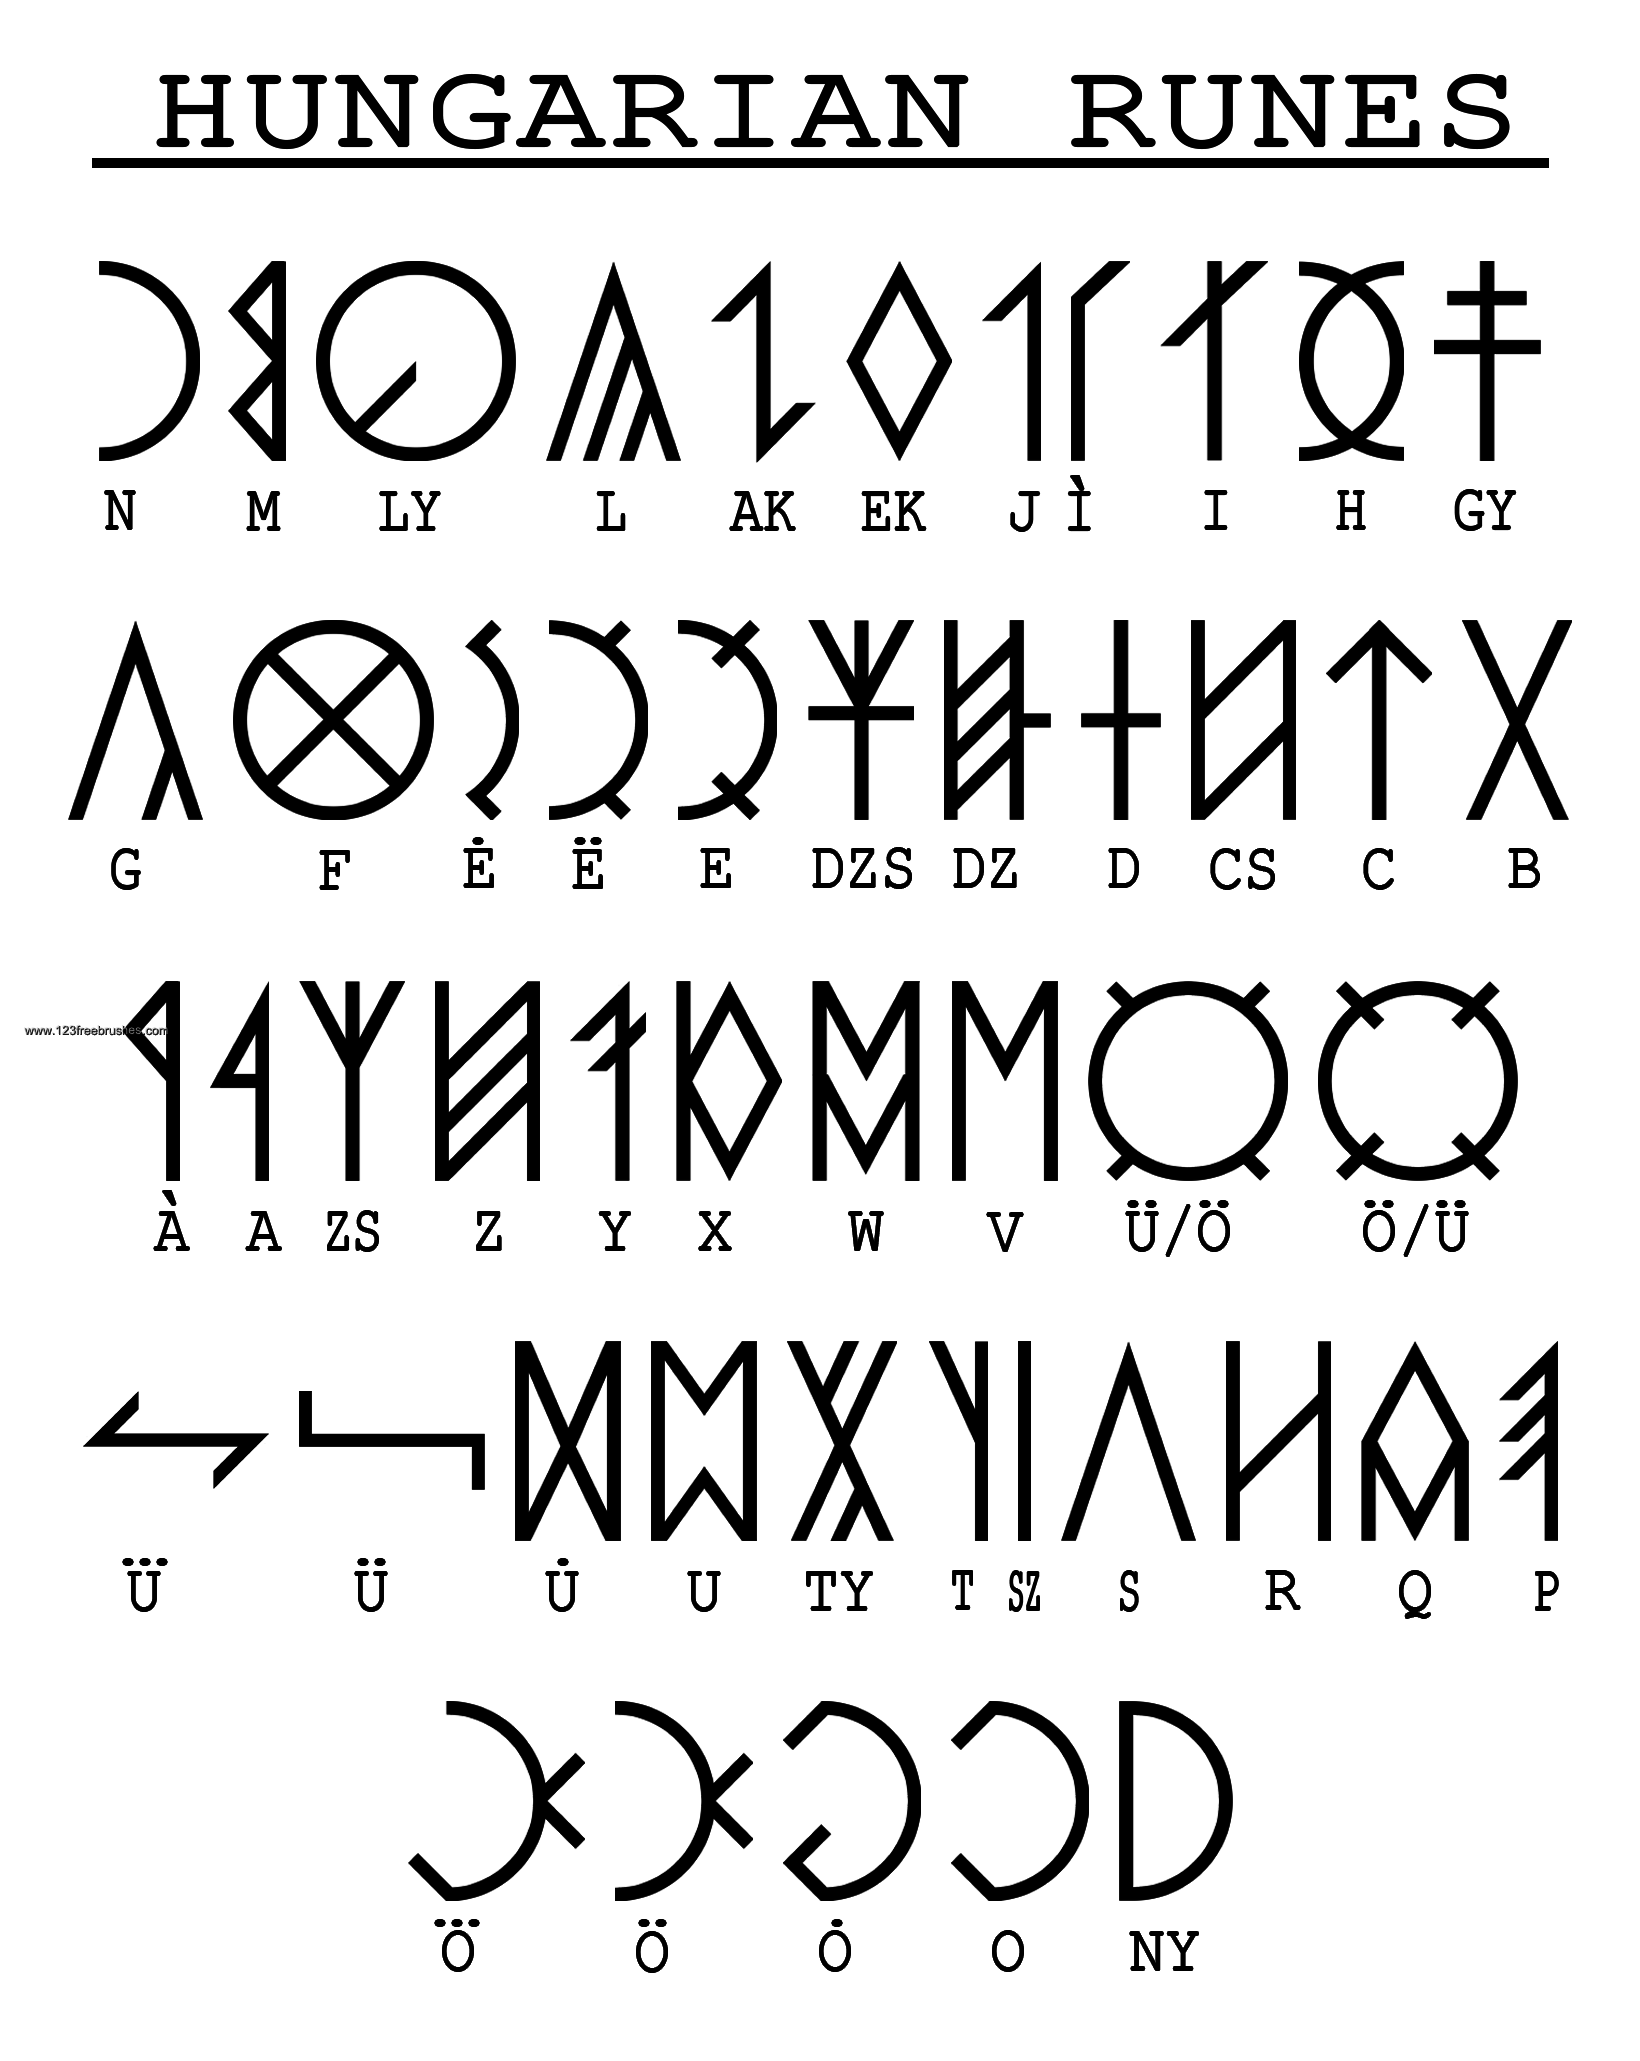 Old Hungarian Runes Alphabet